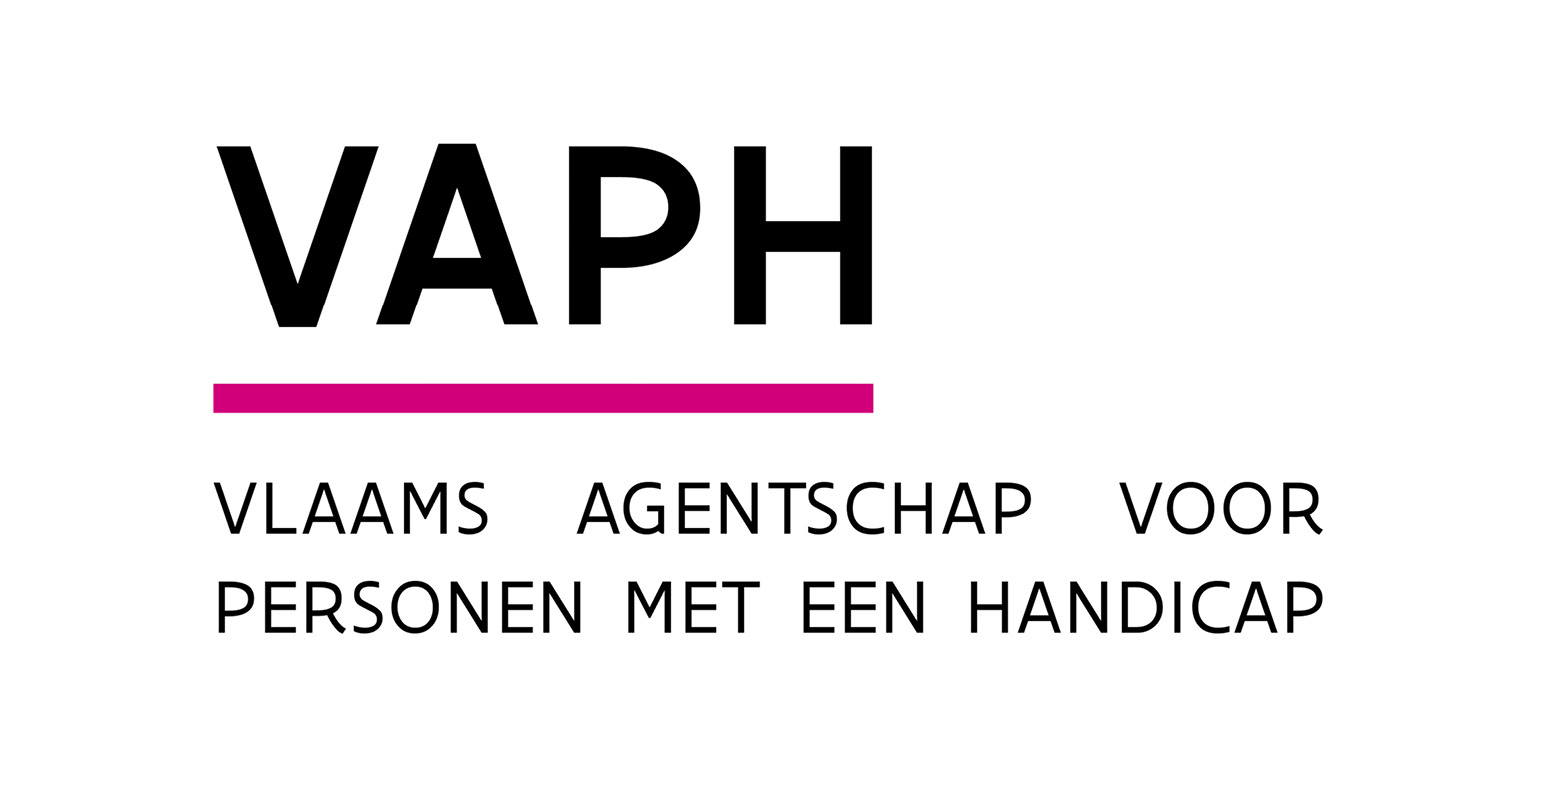 vaph-logo